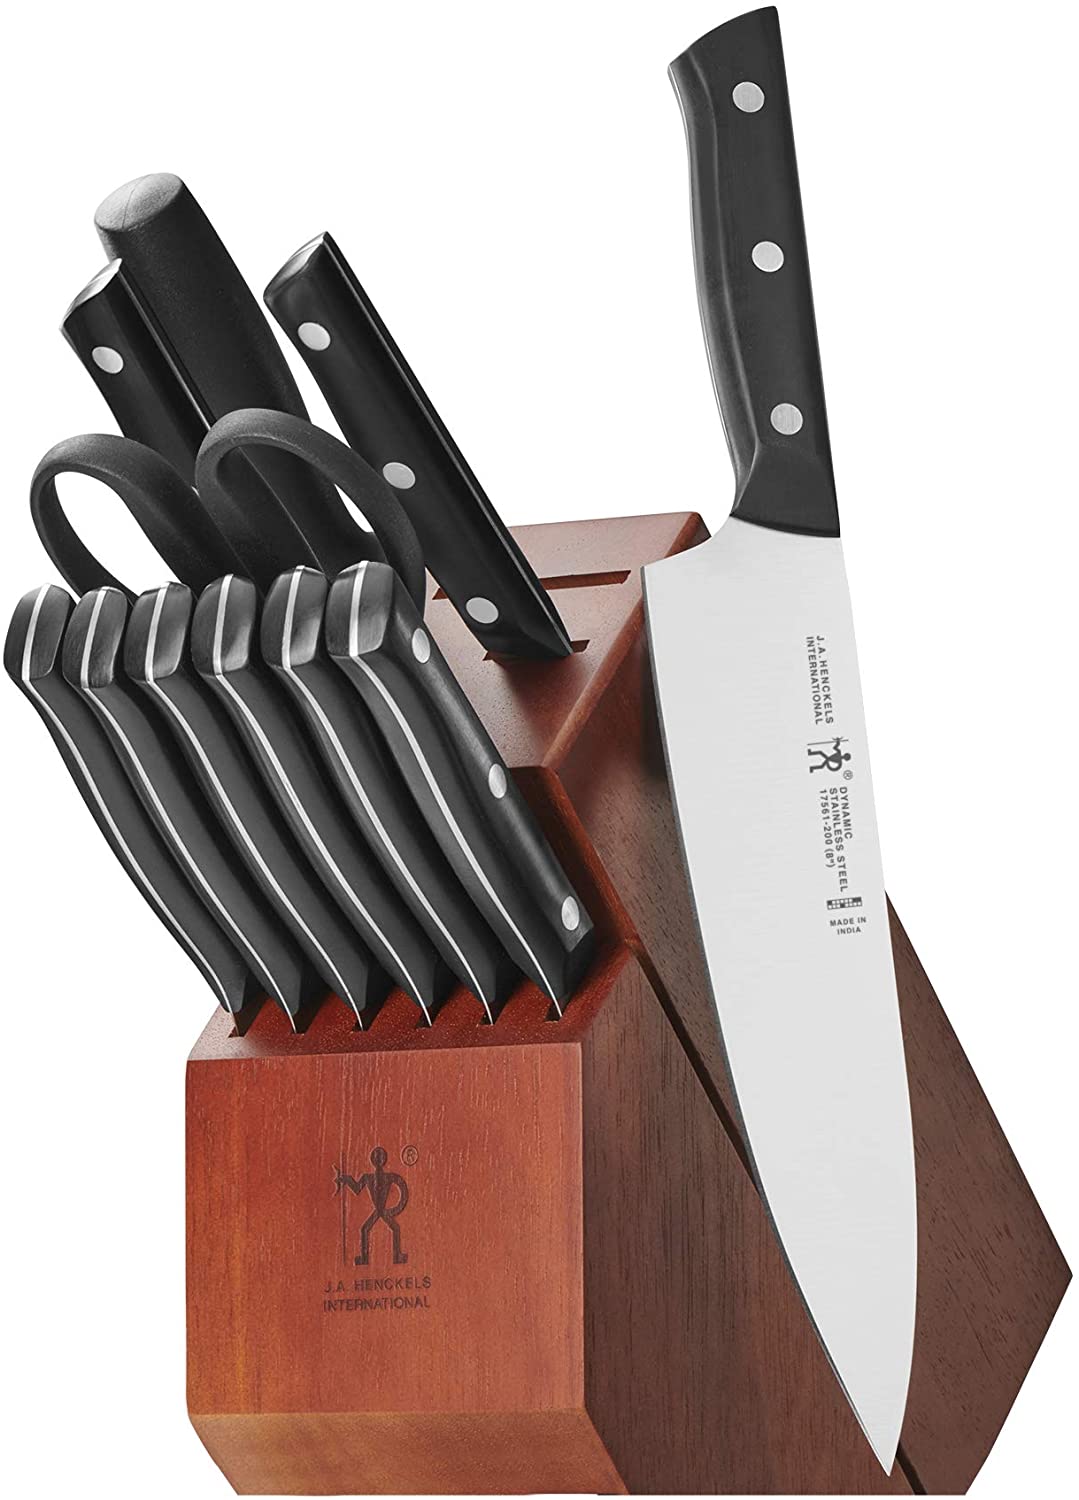 8x J.A. Henckels Fine Edge Comfort Stainless Steel Kitchen Knife set Knives